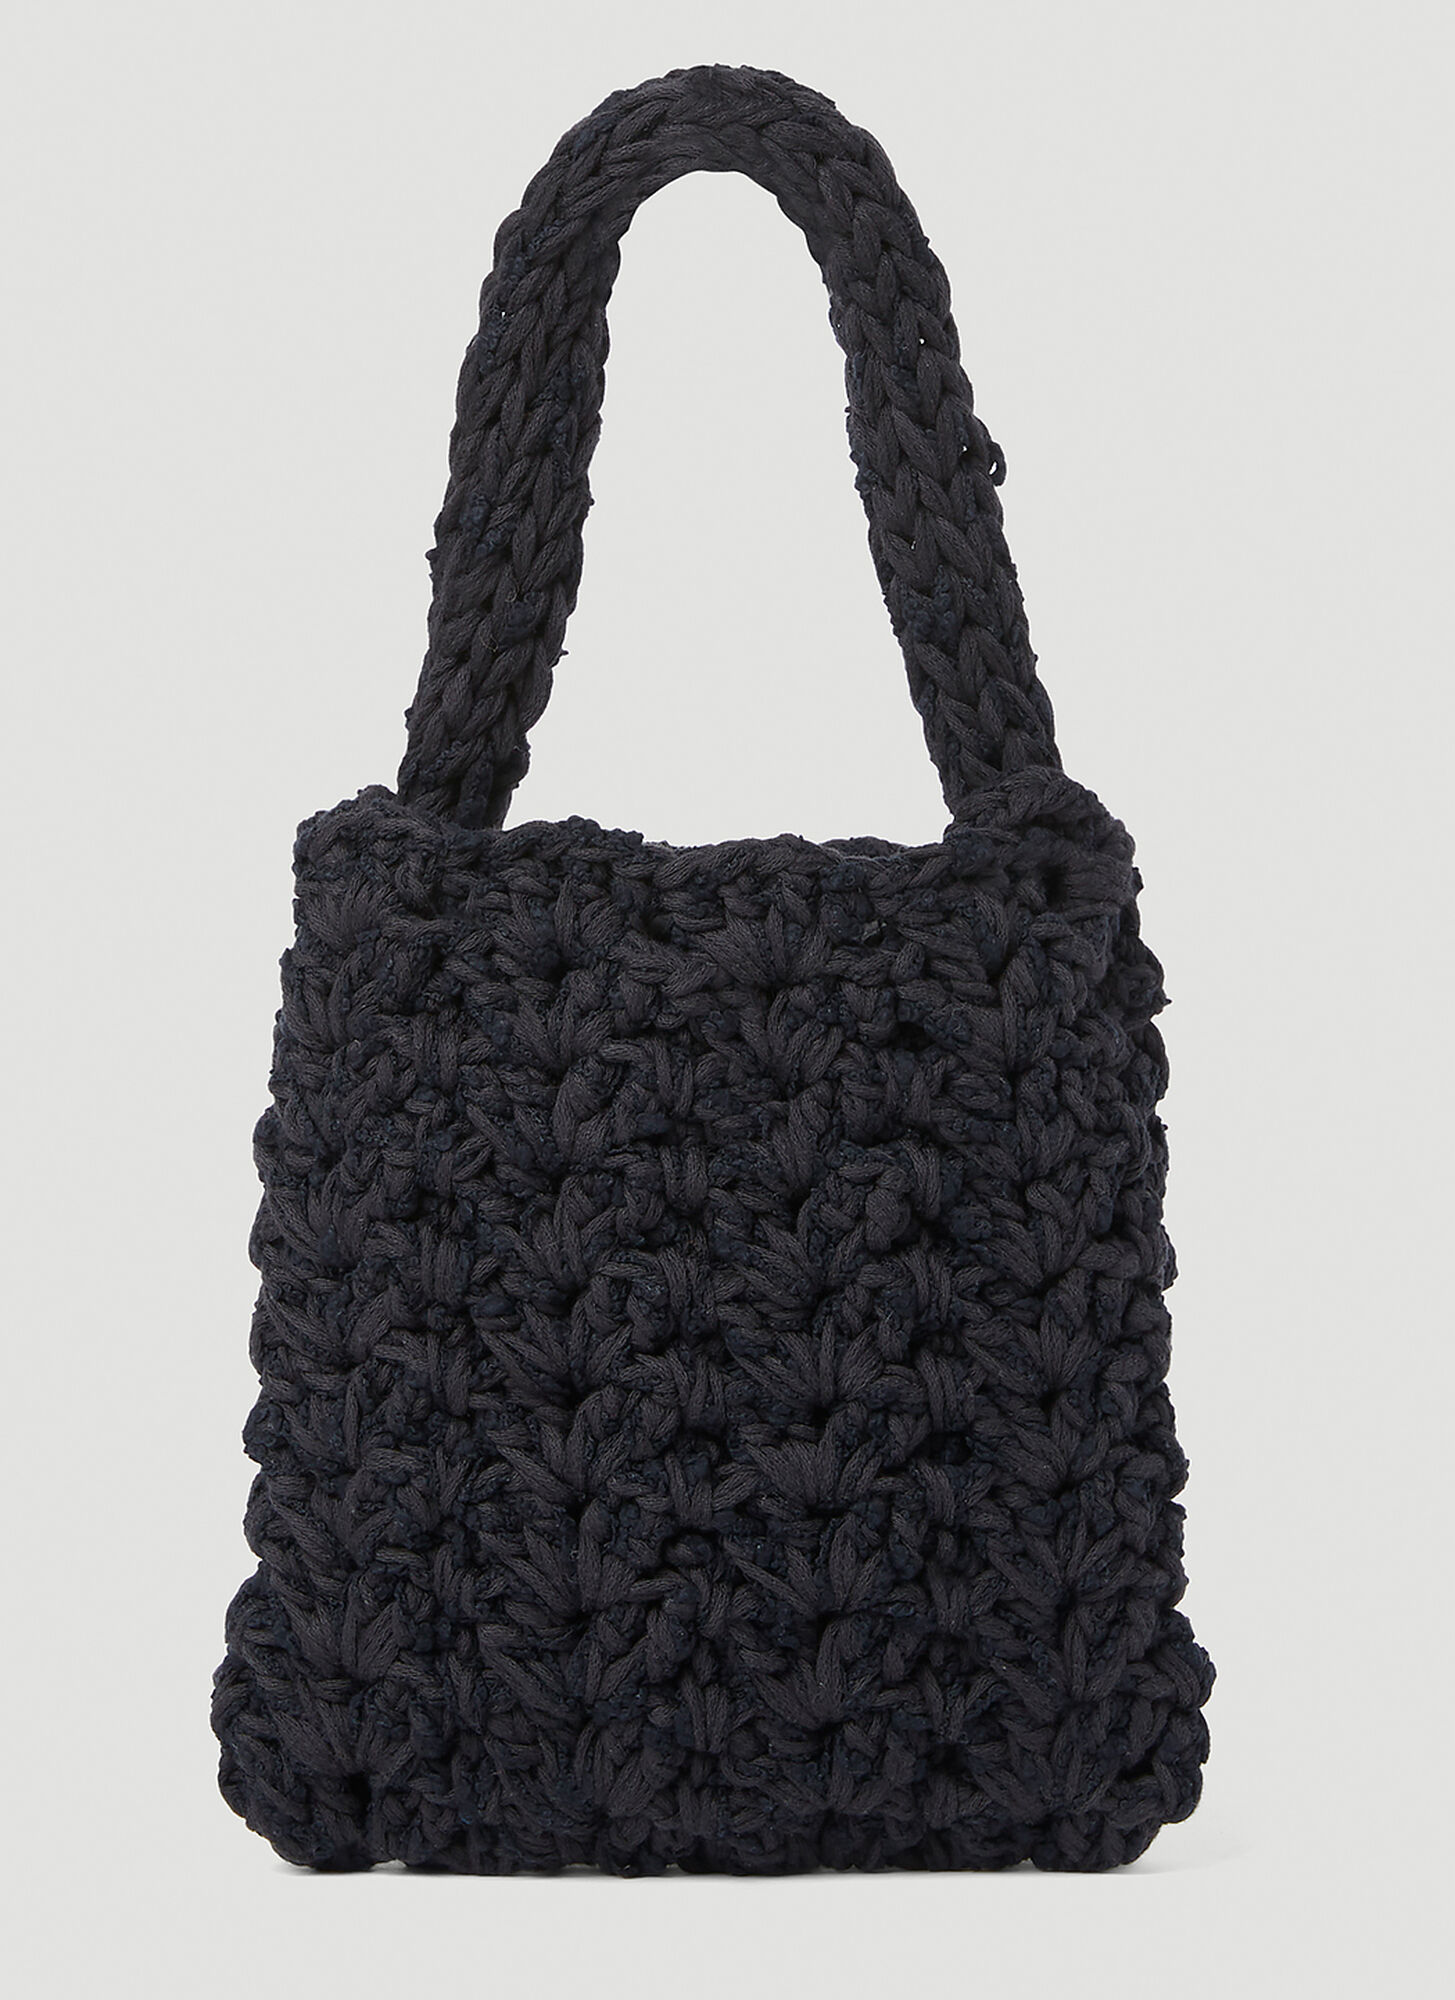 Marco Rambaldi Knit Shoulder Bag In Black